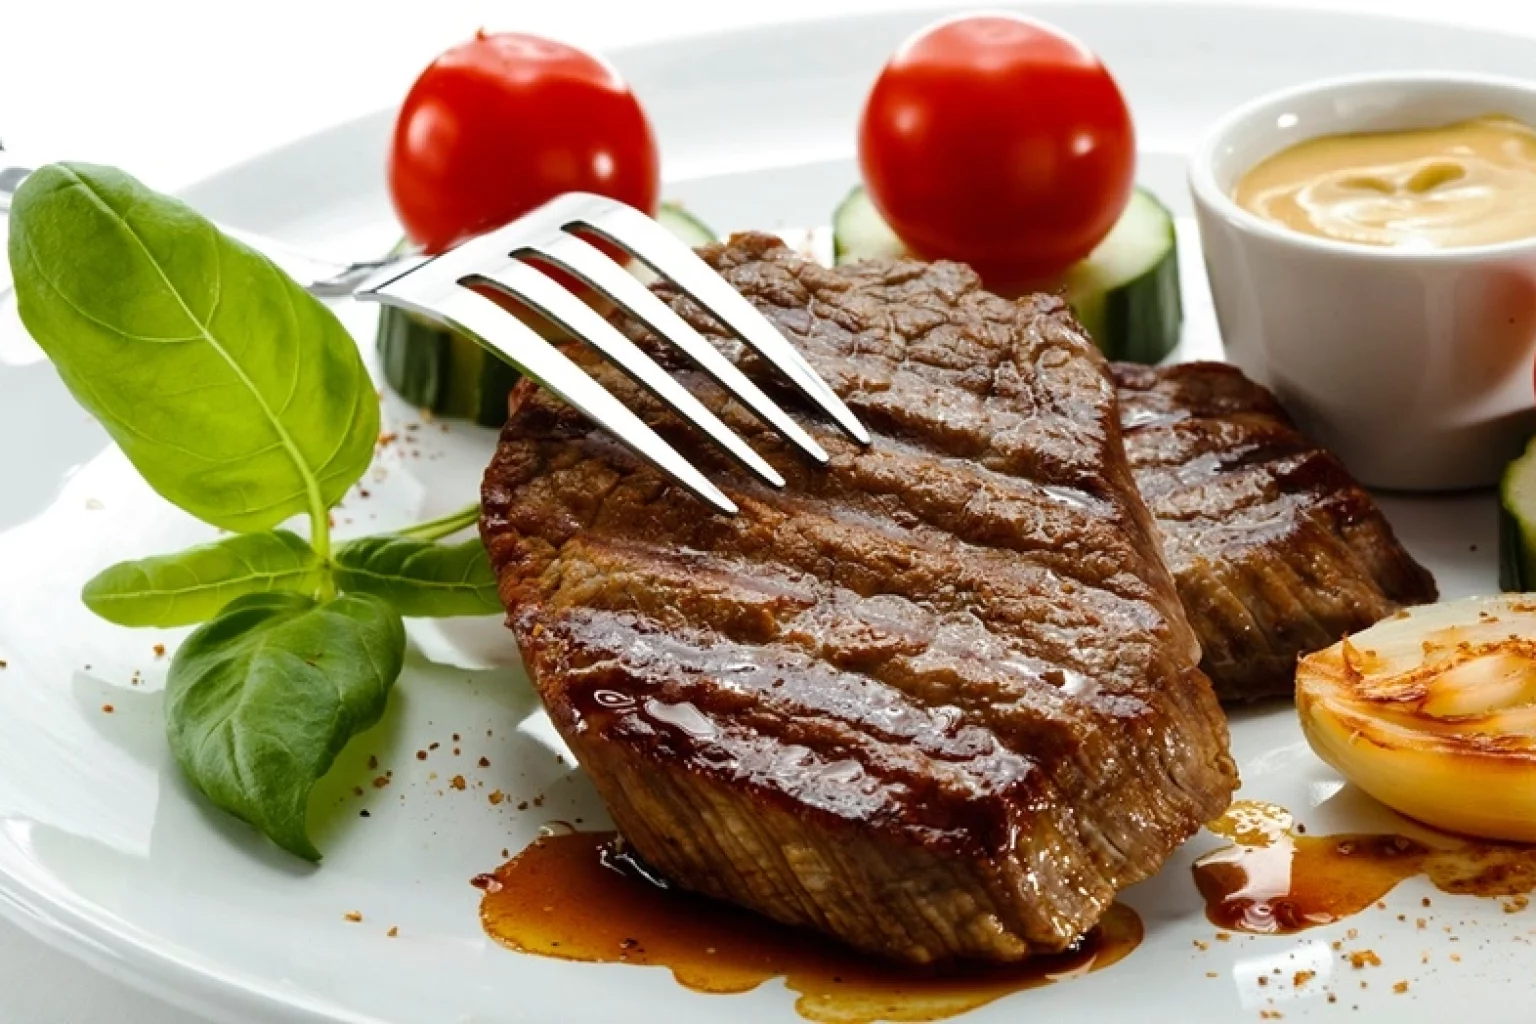 Club steak at home meal